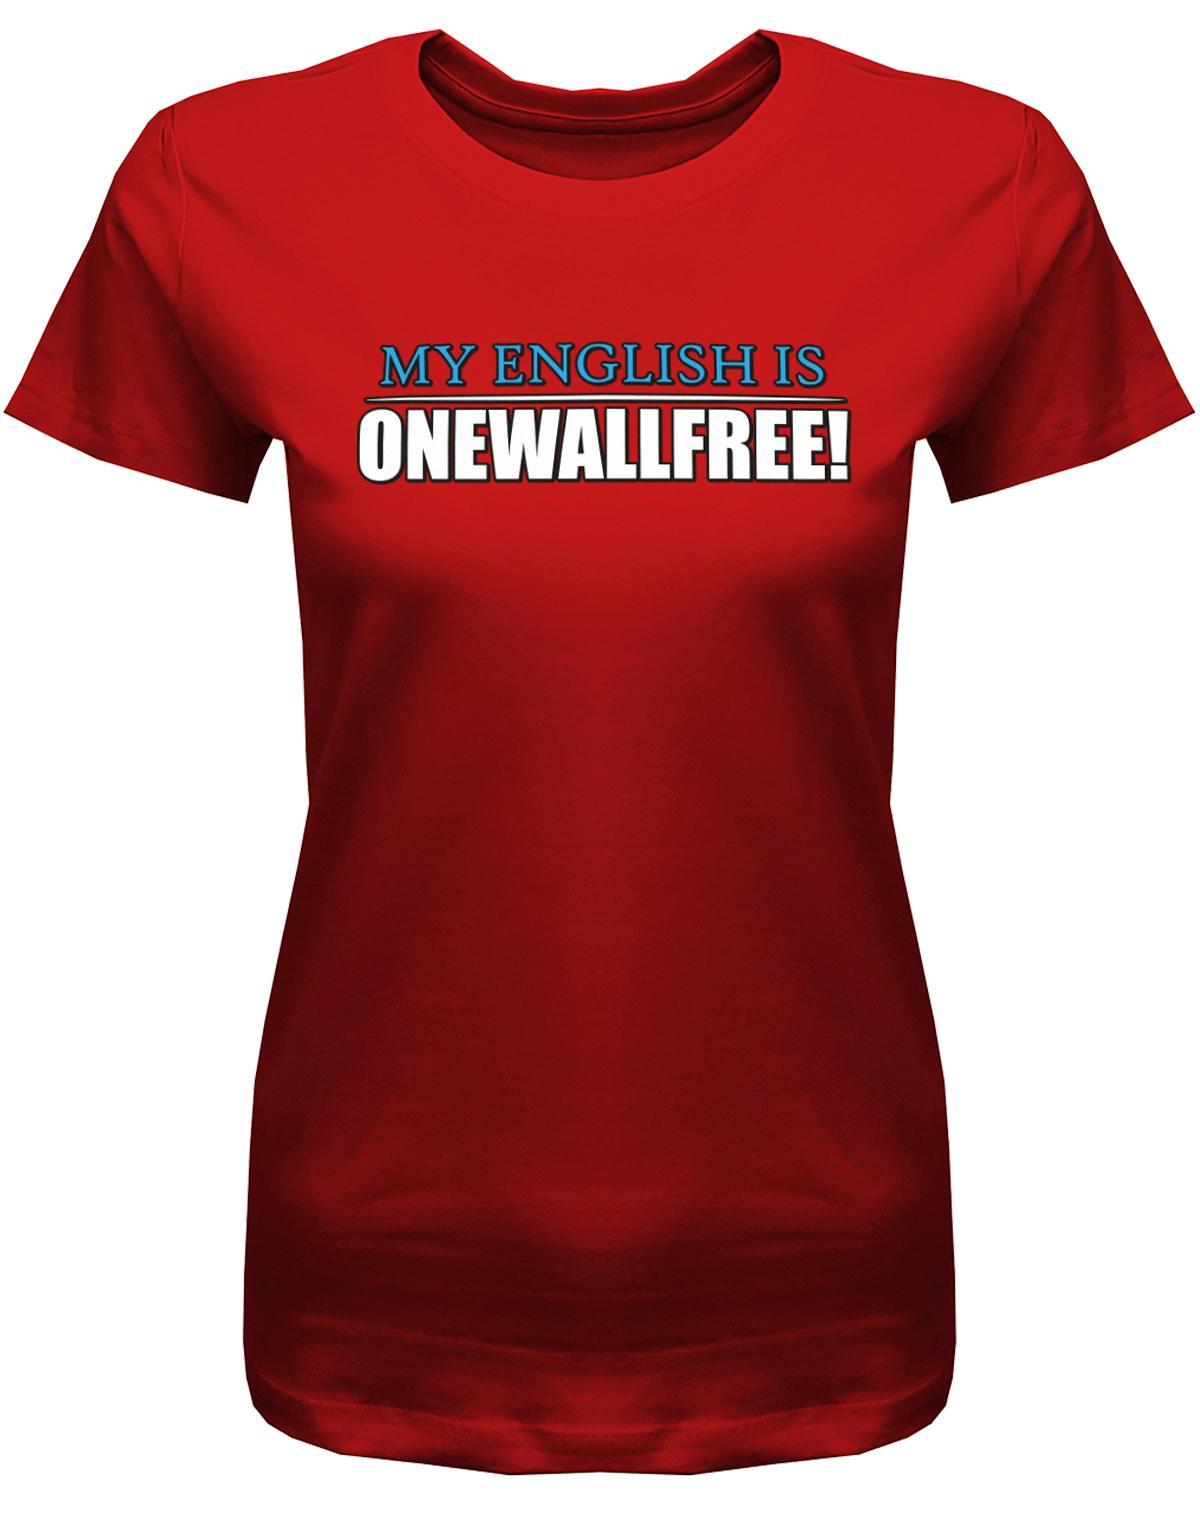 My-English-is-onewallfree-Damen-Shirt-Rot